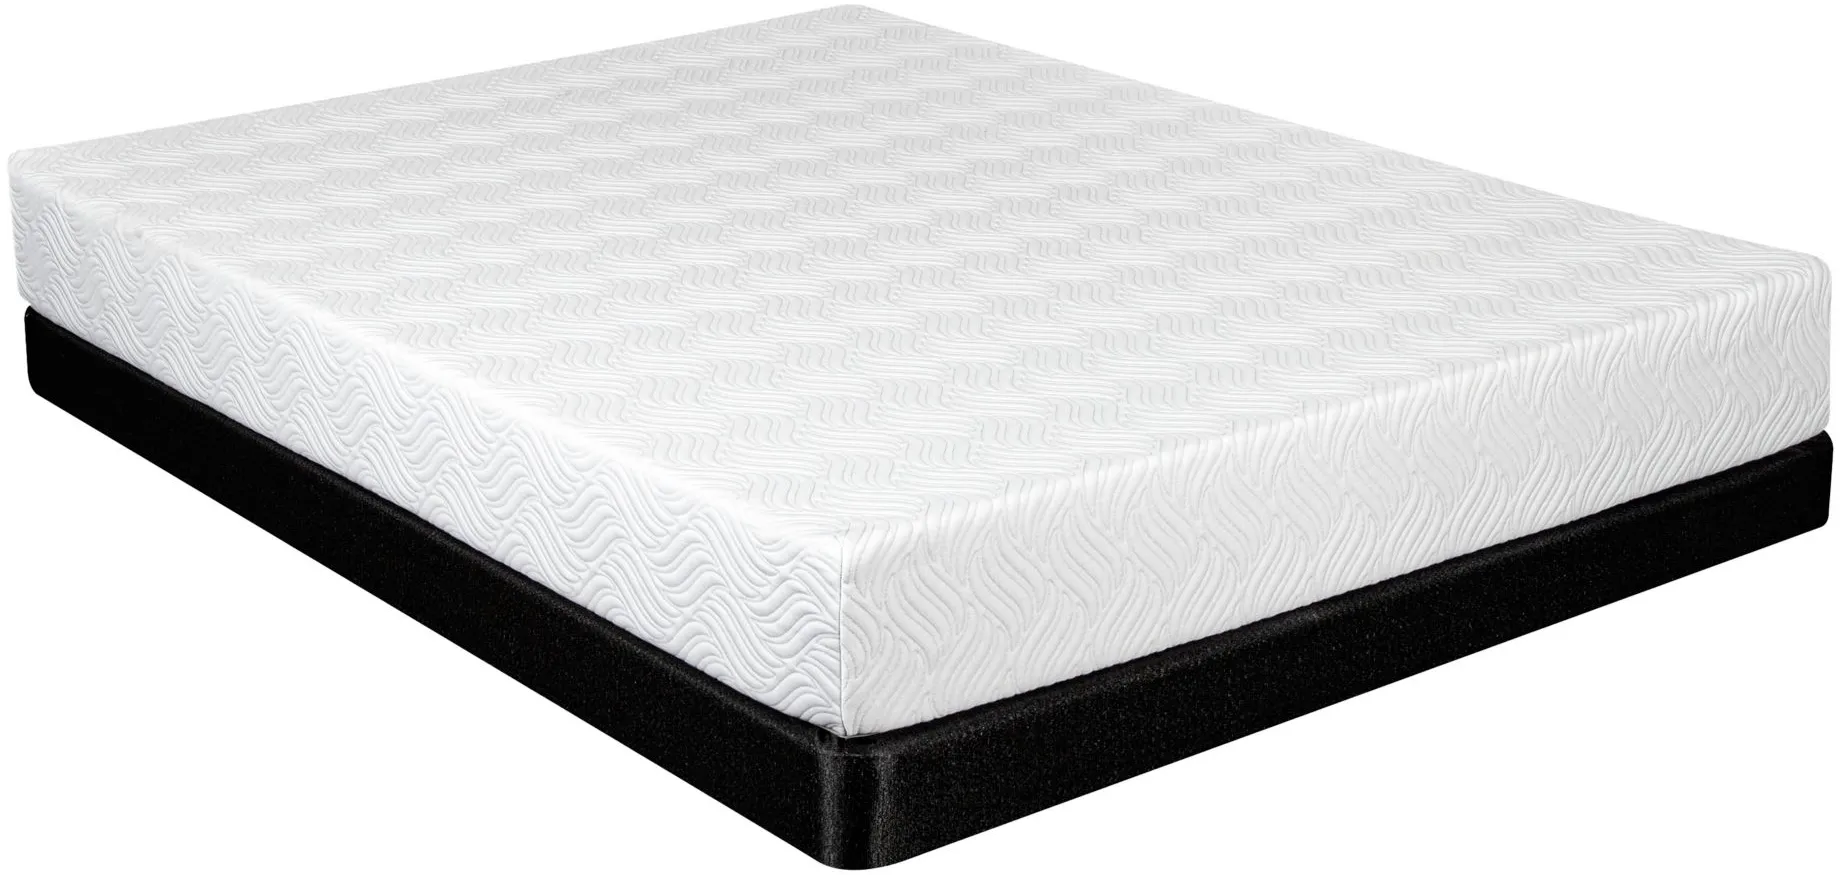 bellanest imperial plush mattress